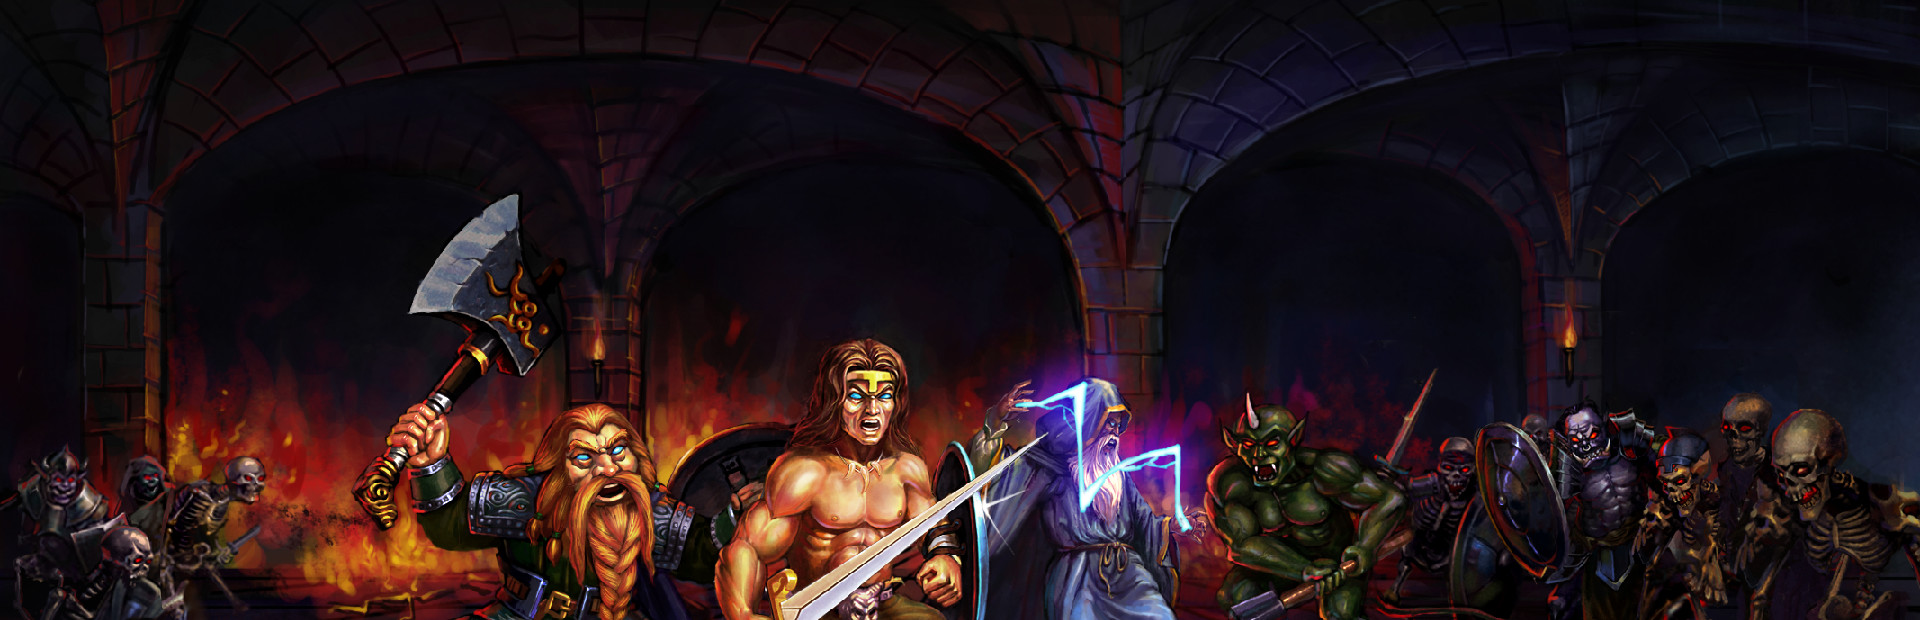 Dark Quest cover image